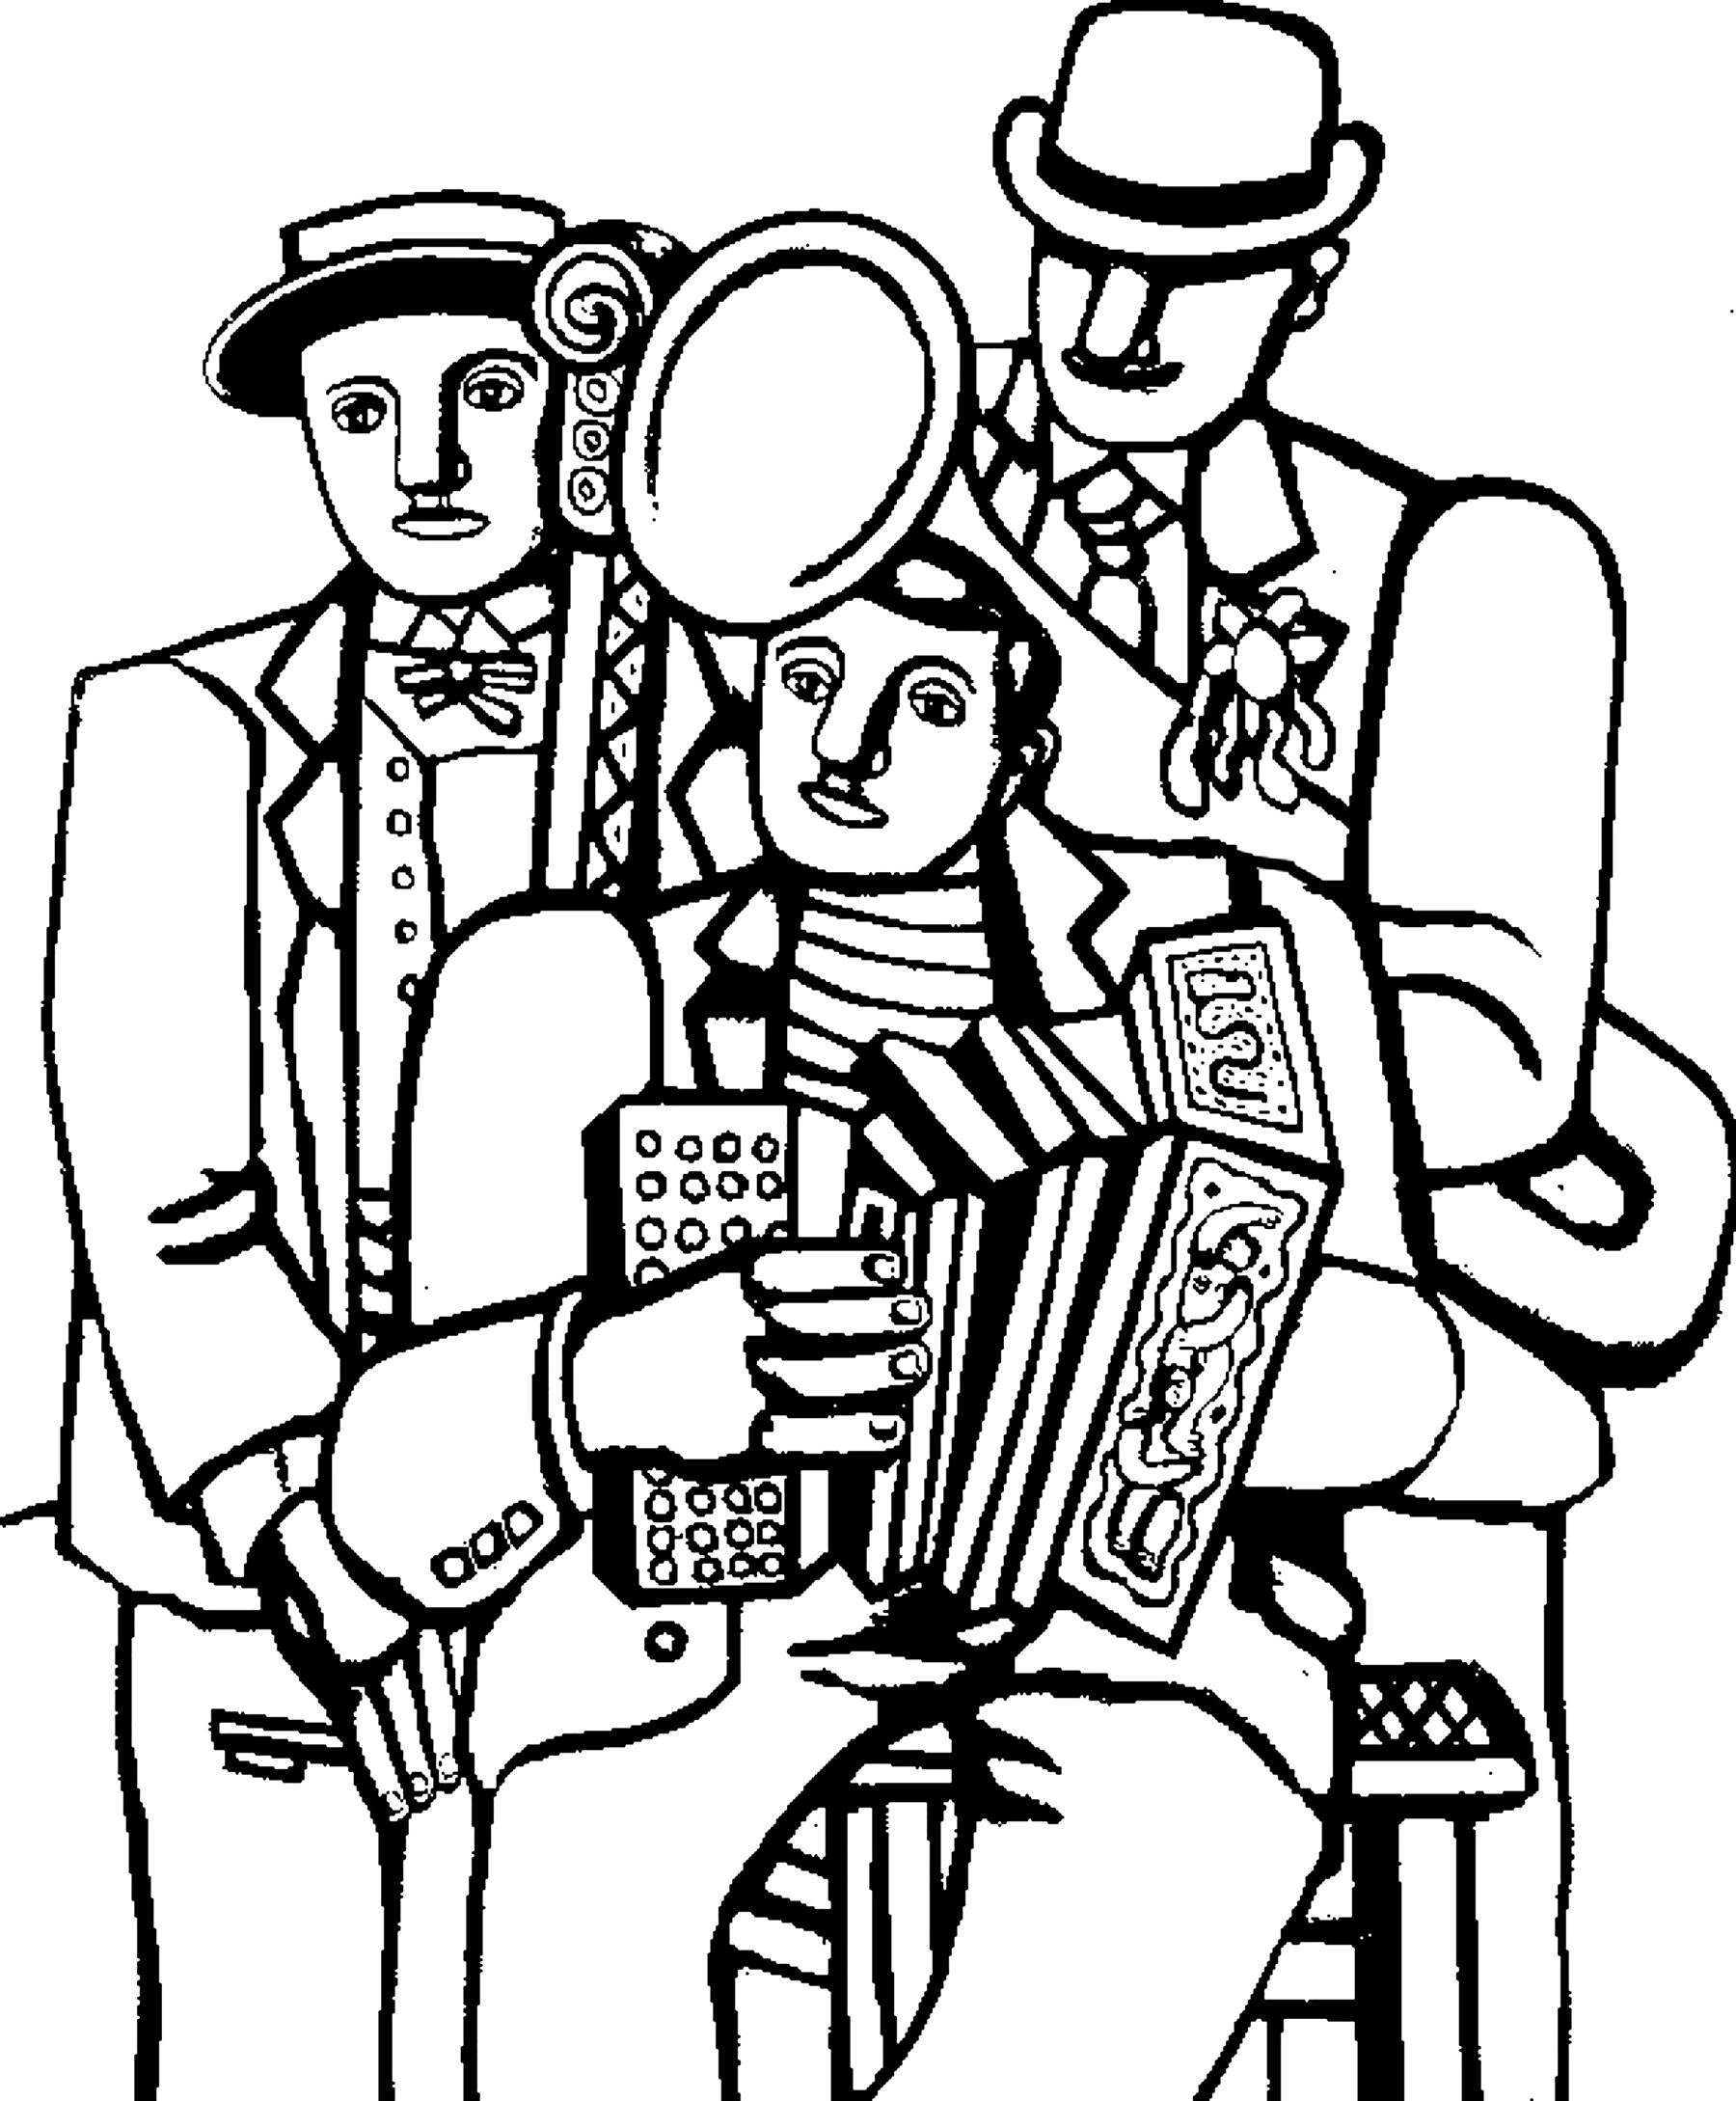 Fernand leger   three musicians - Image with : Music, Fernand Leger